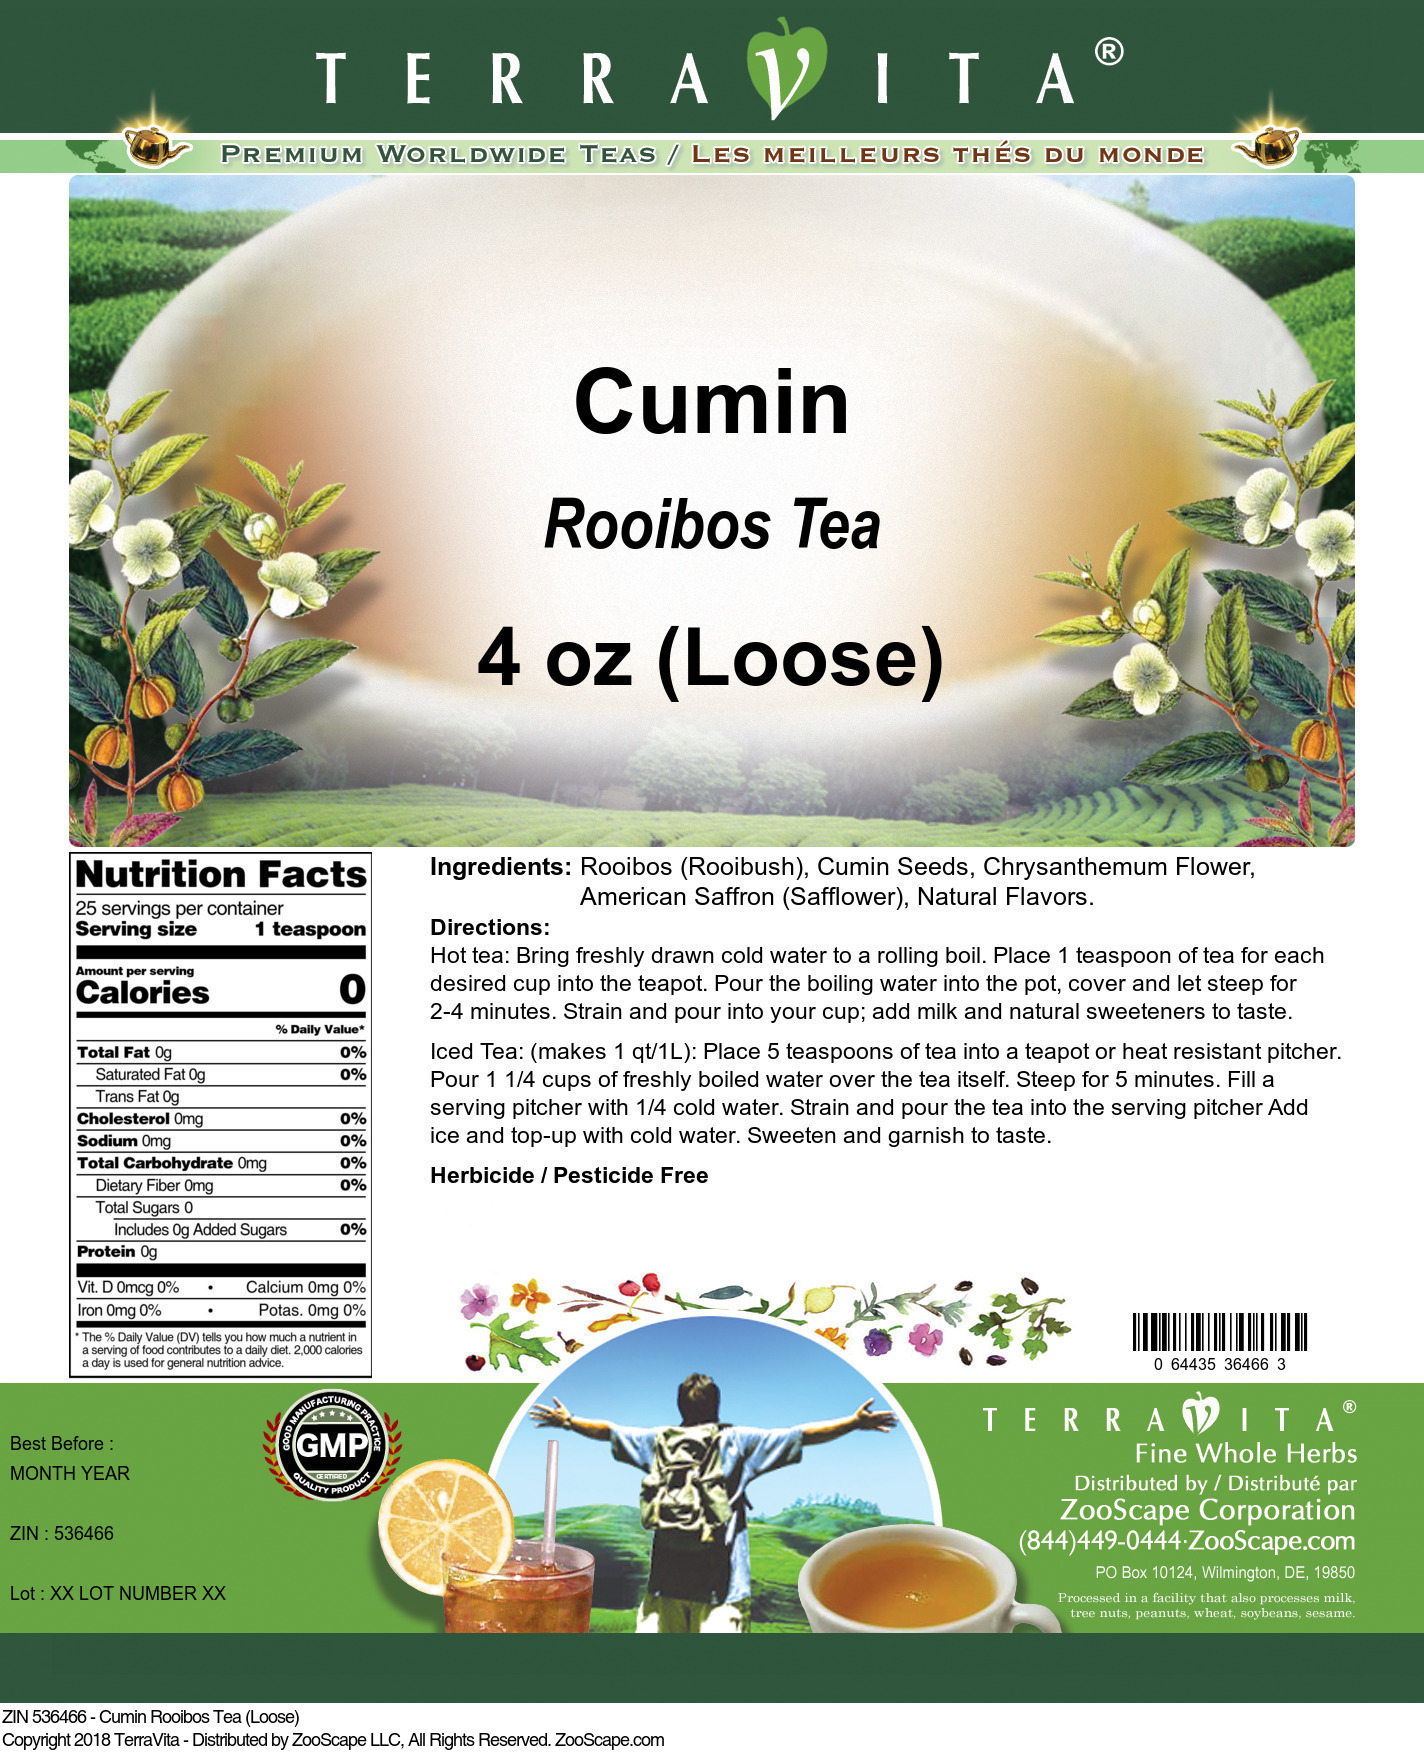 Cumin Rooibos Tea (Loose) - Label